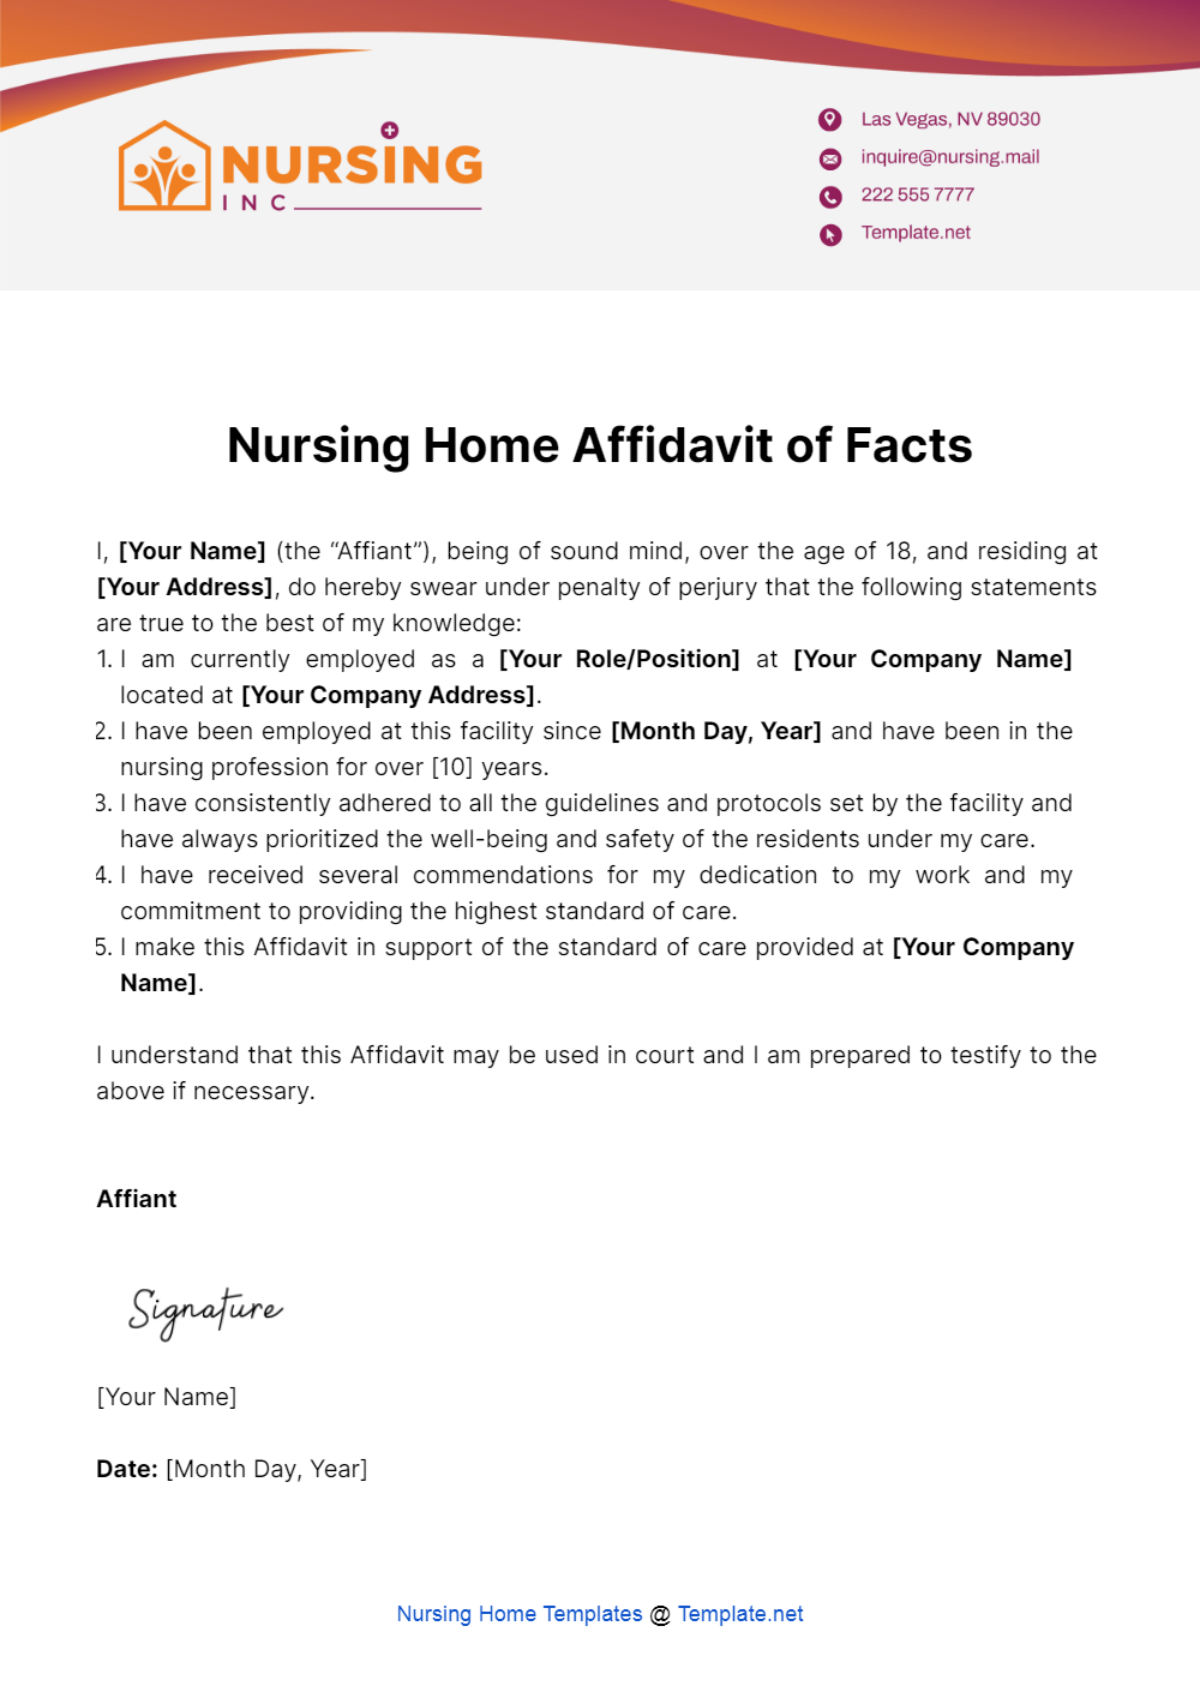 Nursing Home Affidavit of Facts Template